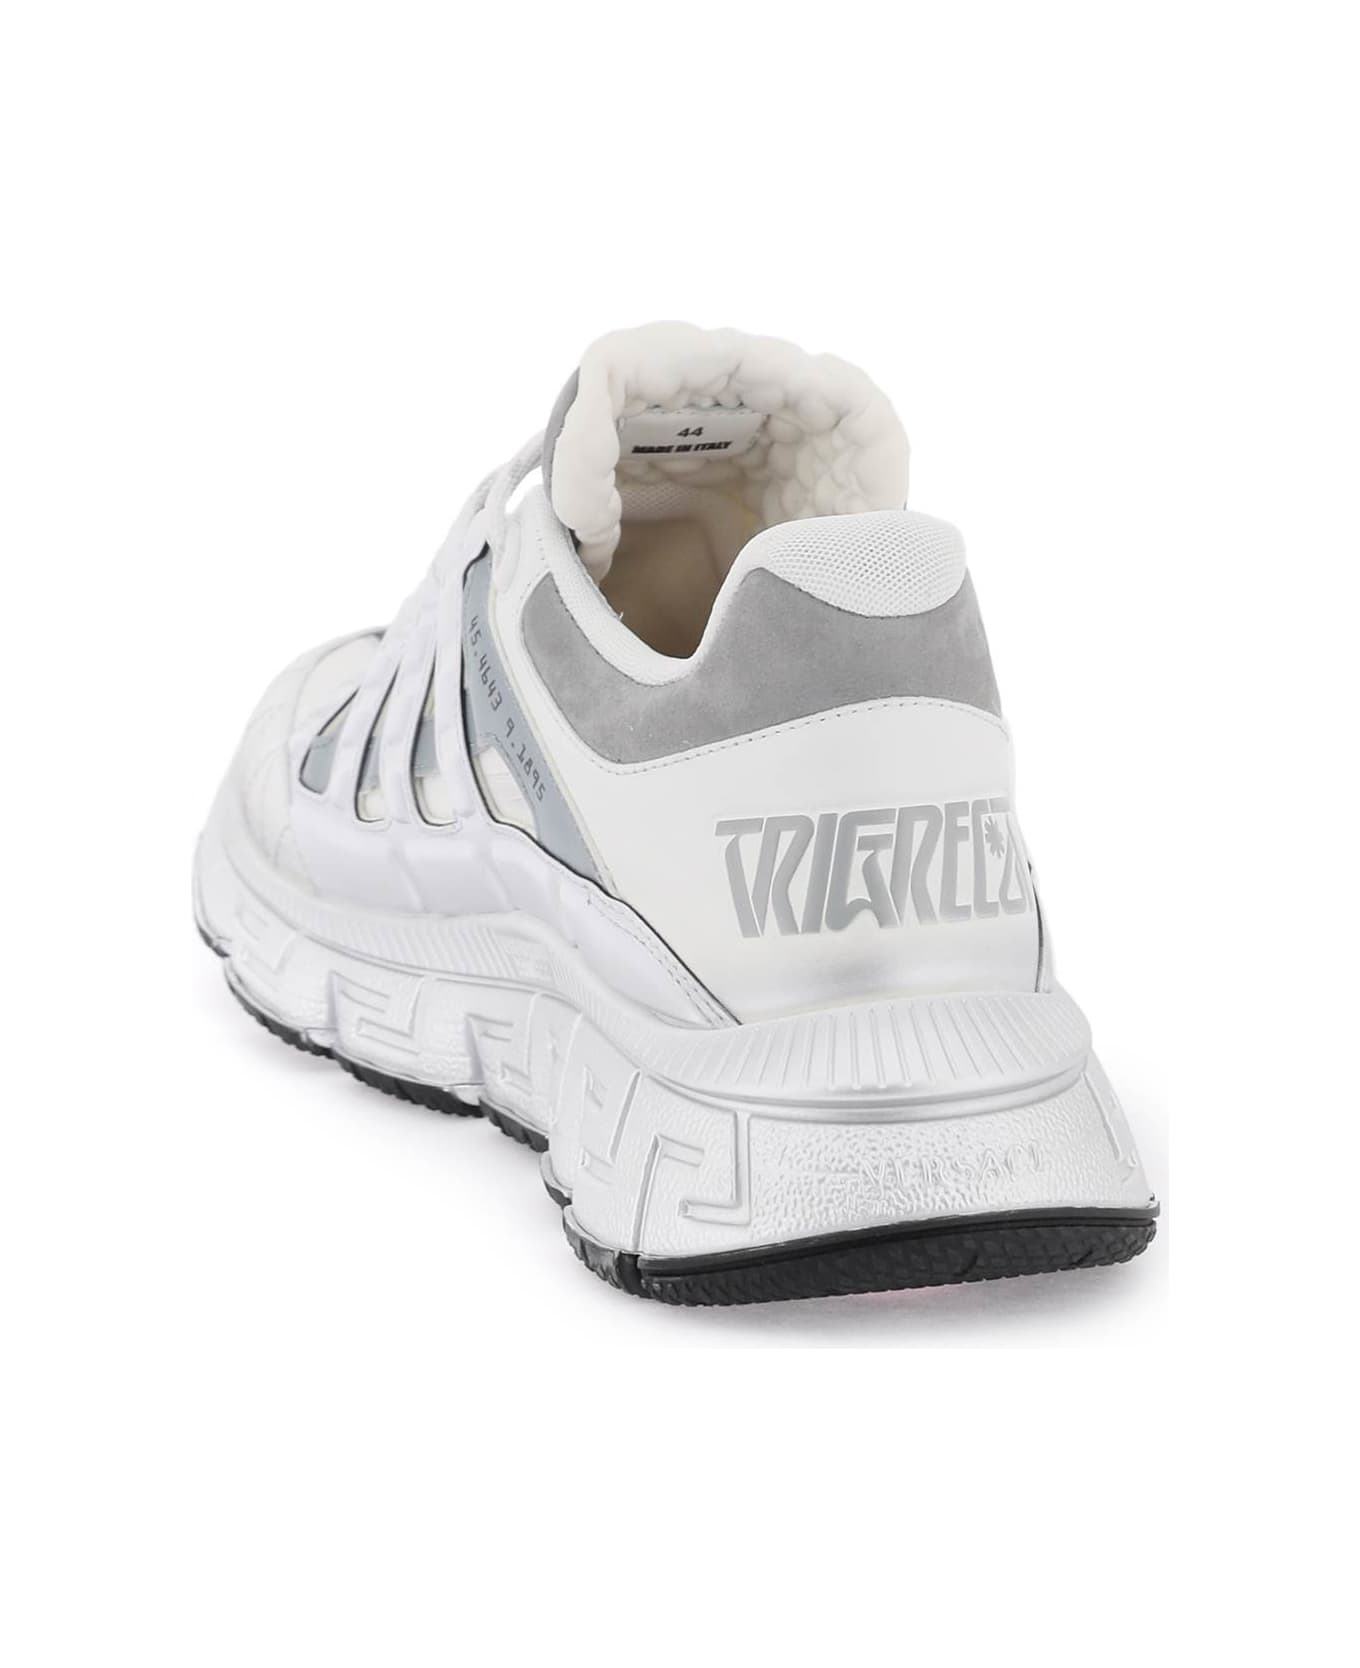 Versace White 'trigreca' Sneakers - White スニーカー